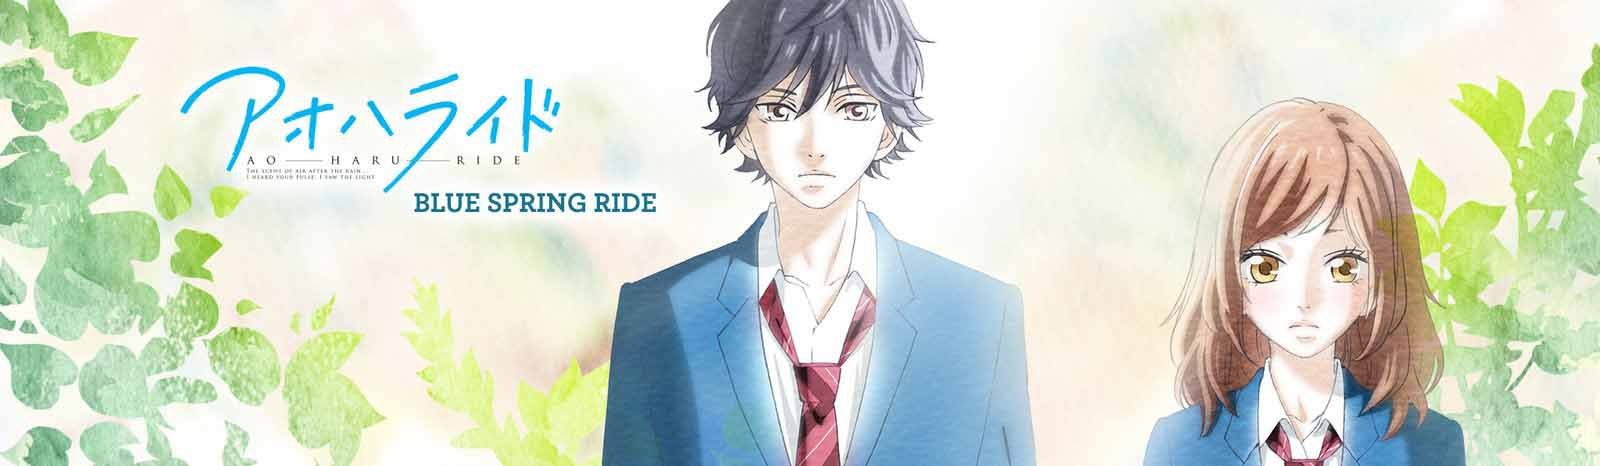 Crunchyroll - Ao Haru Ride Anime Coming from Production I.G